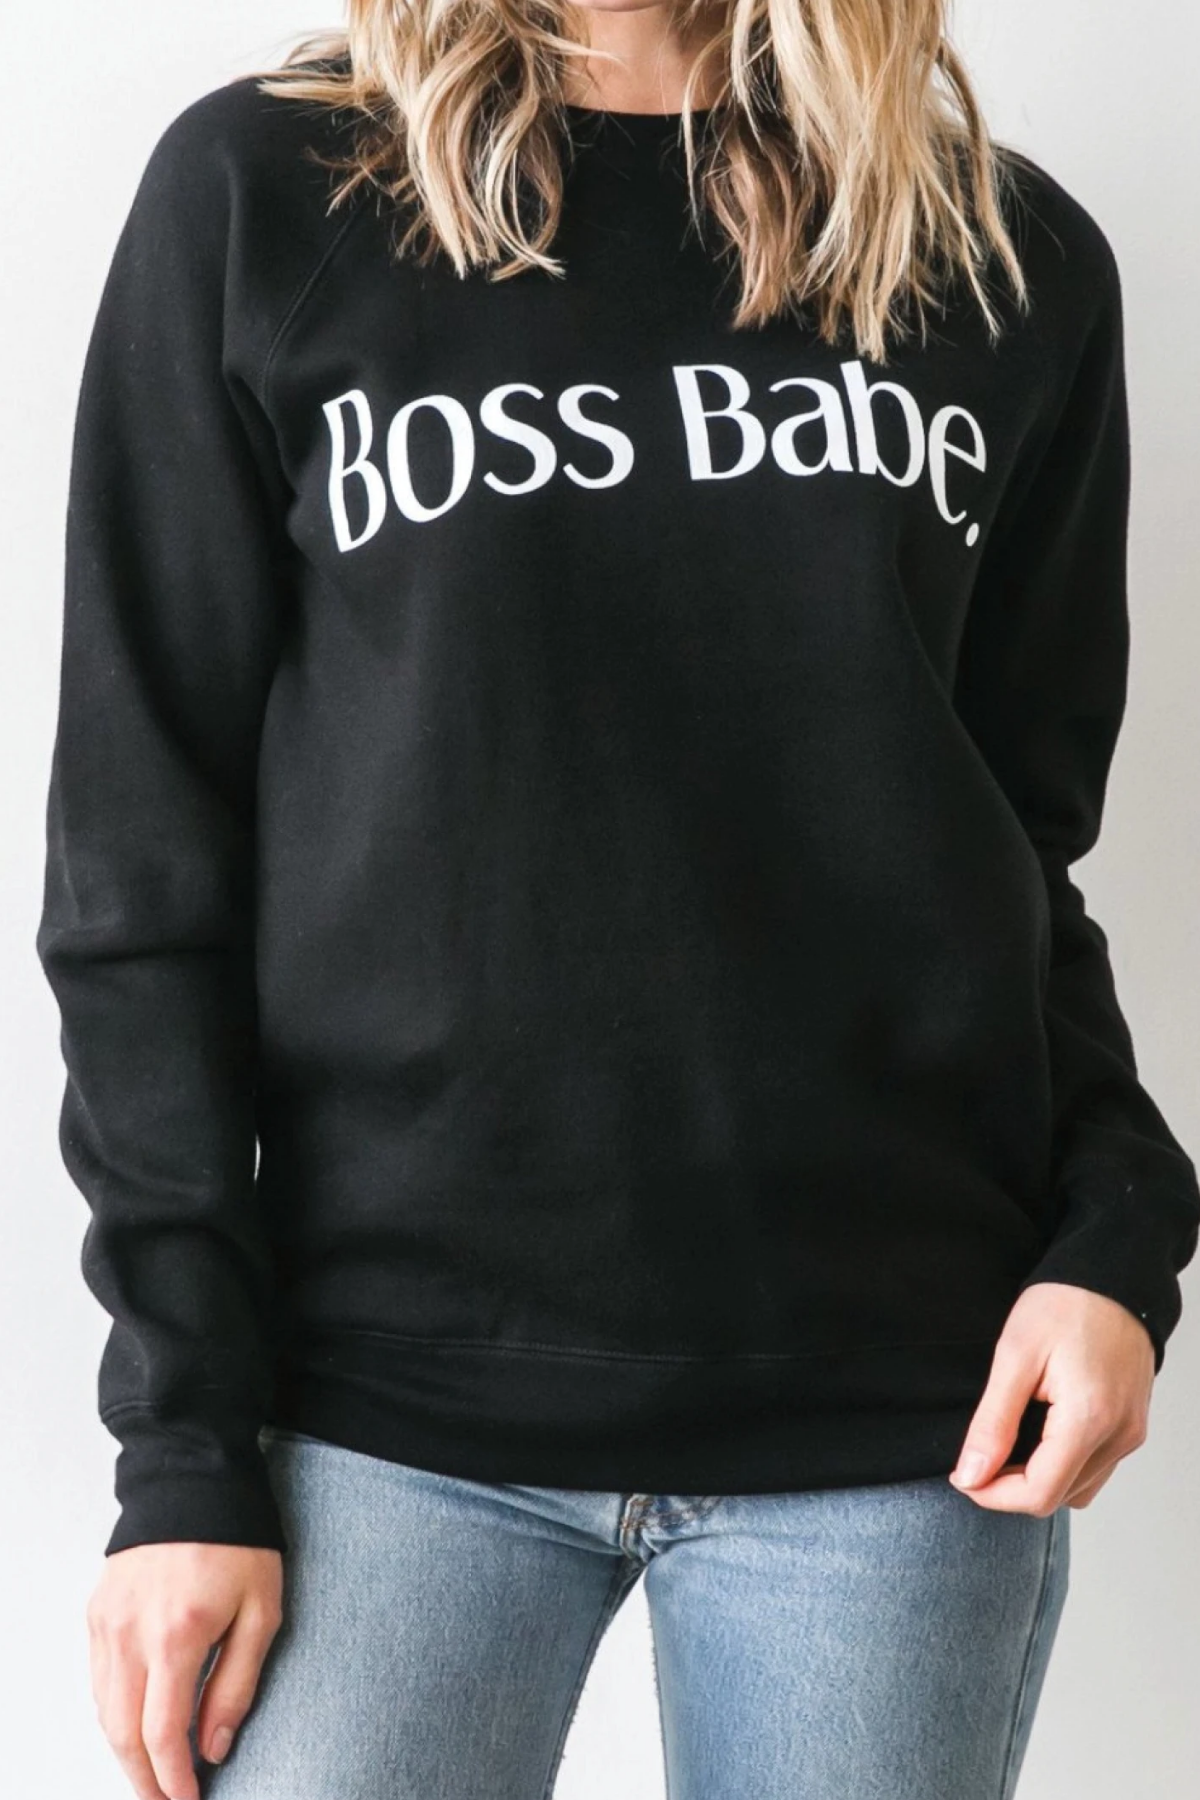 The "BOSS BABE" Classic Crew Neck Sweatshirt